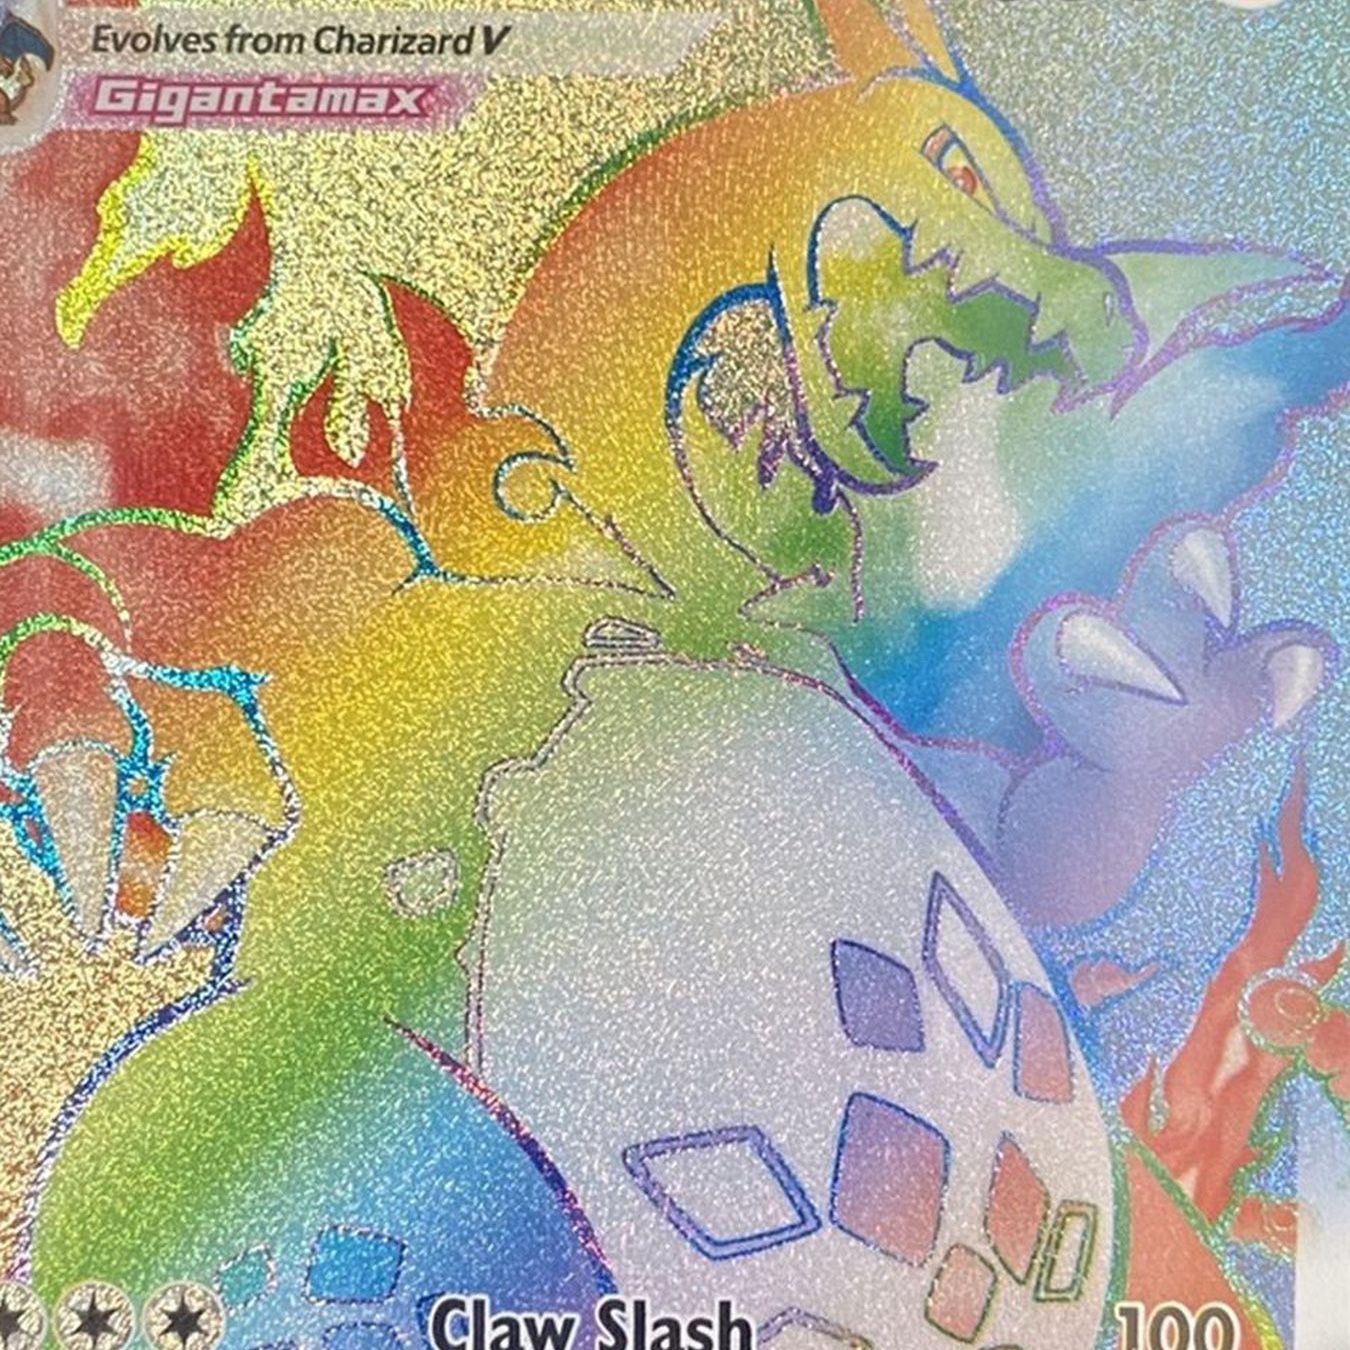 Pokémon 2020 Champions Path Charizard Vmax Rainbow Rare #074/073 Card!!! GRADED GEM MINT 9.5 BGS!!!!! AMAZING!!